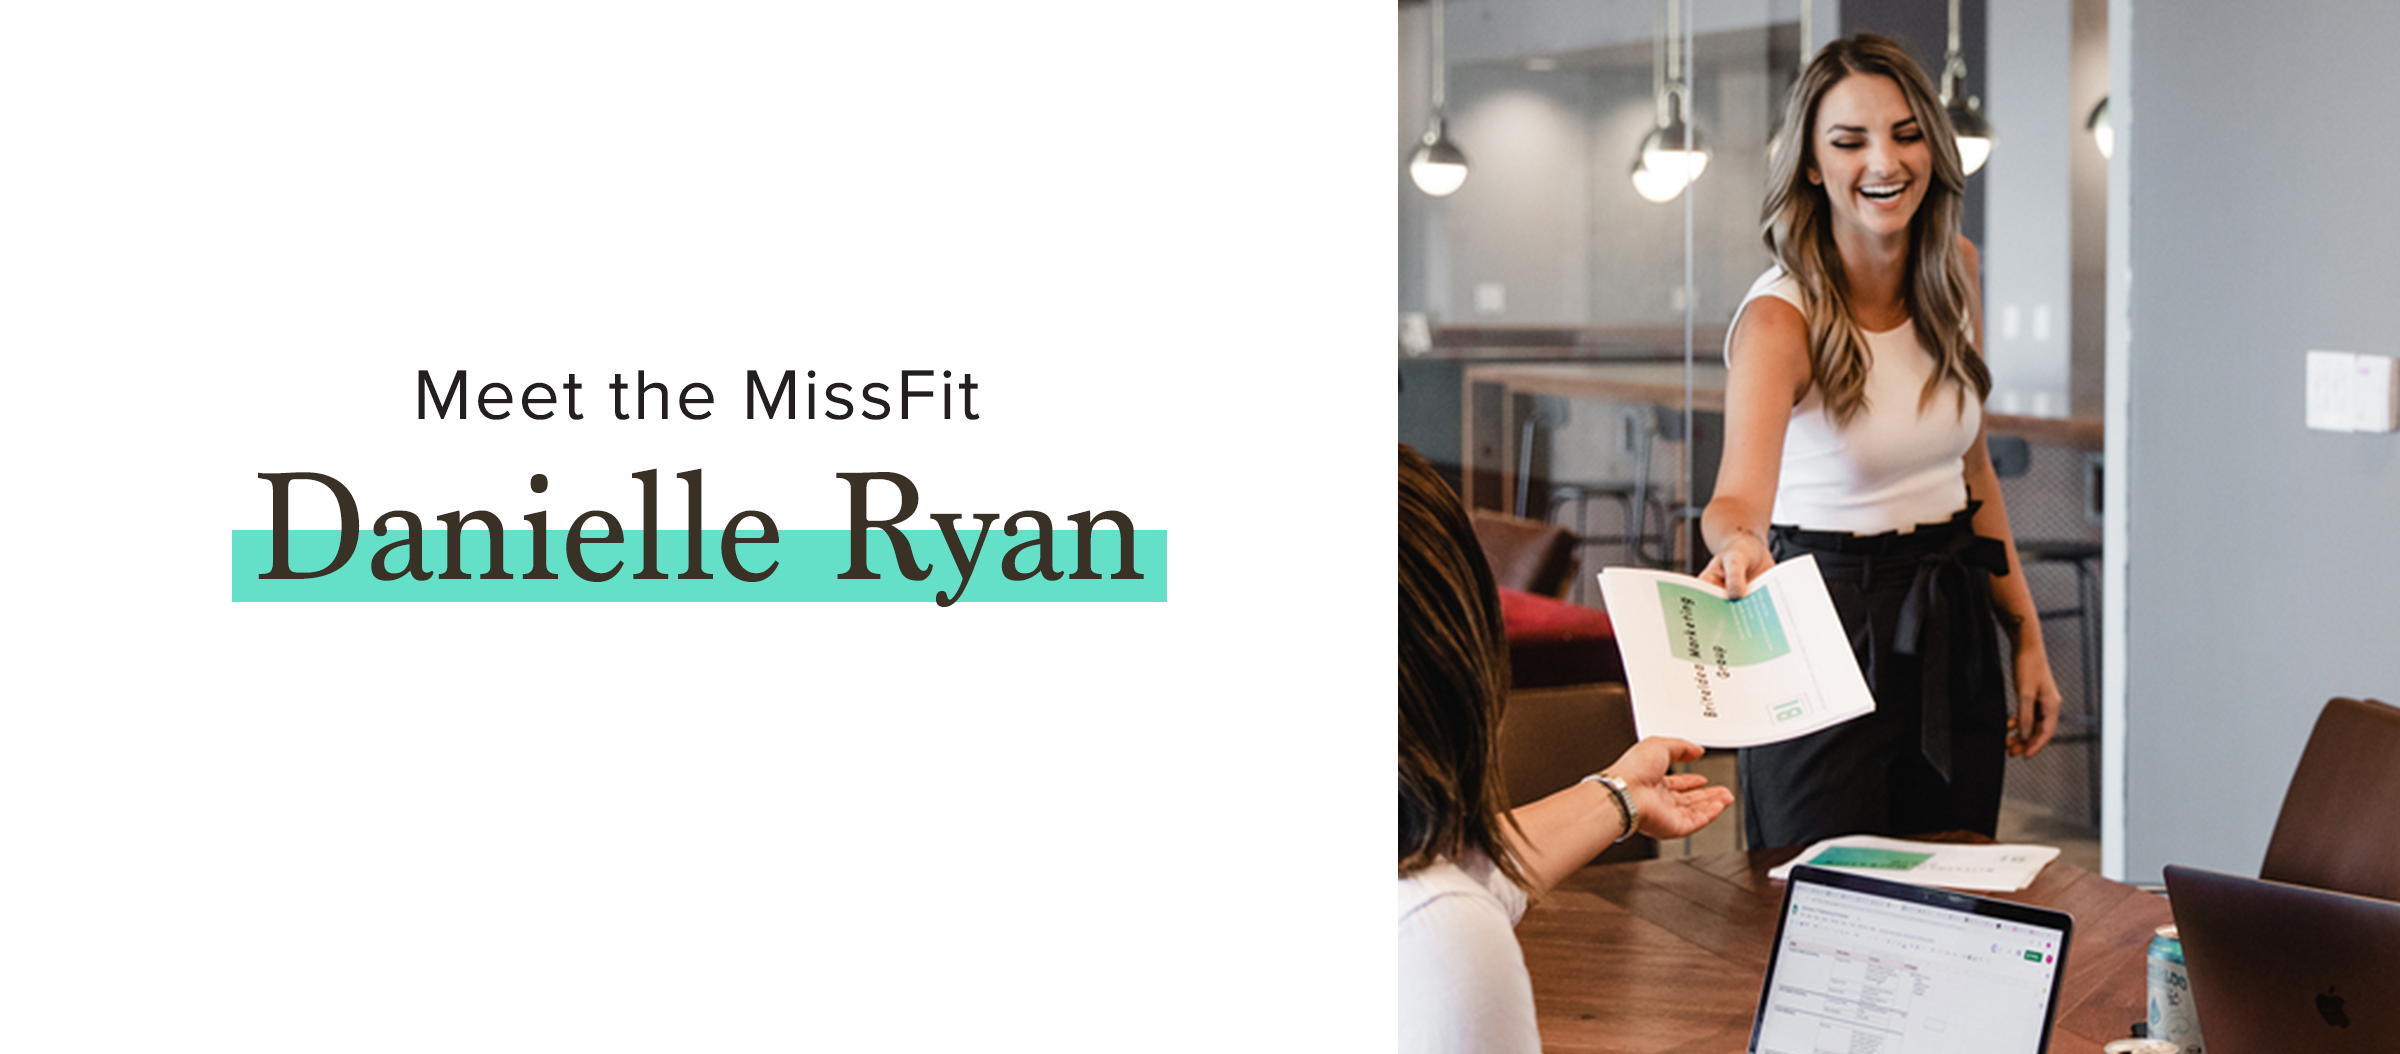 Meet the MissFits, Danielle Ryan